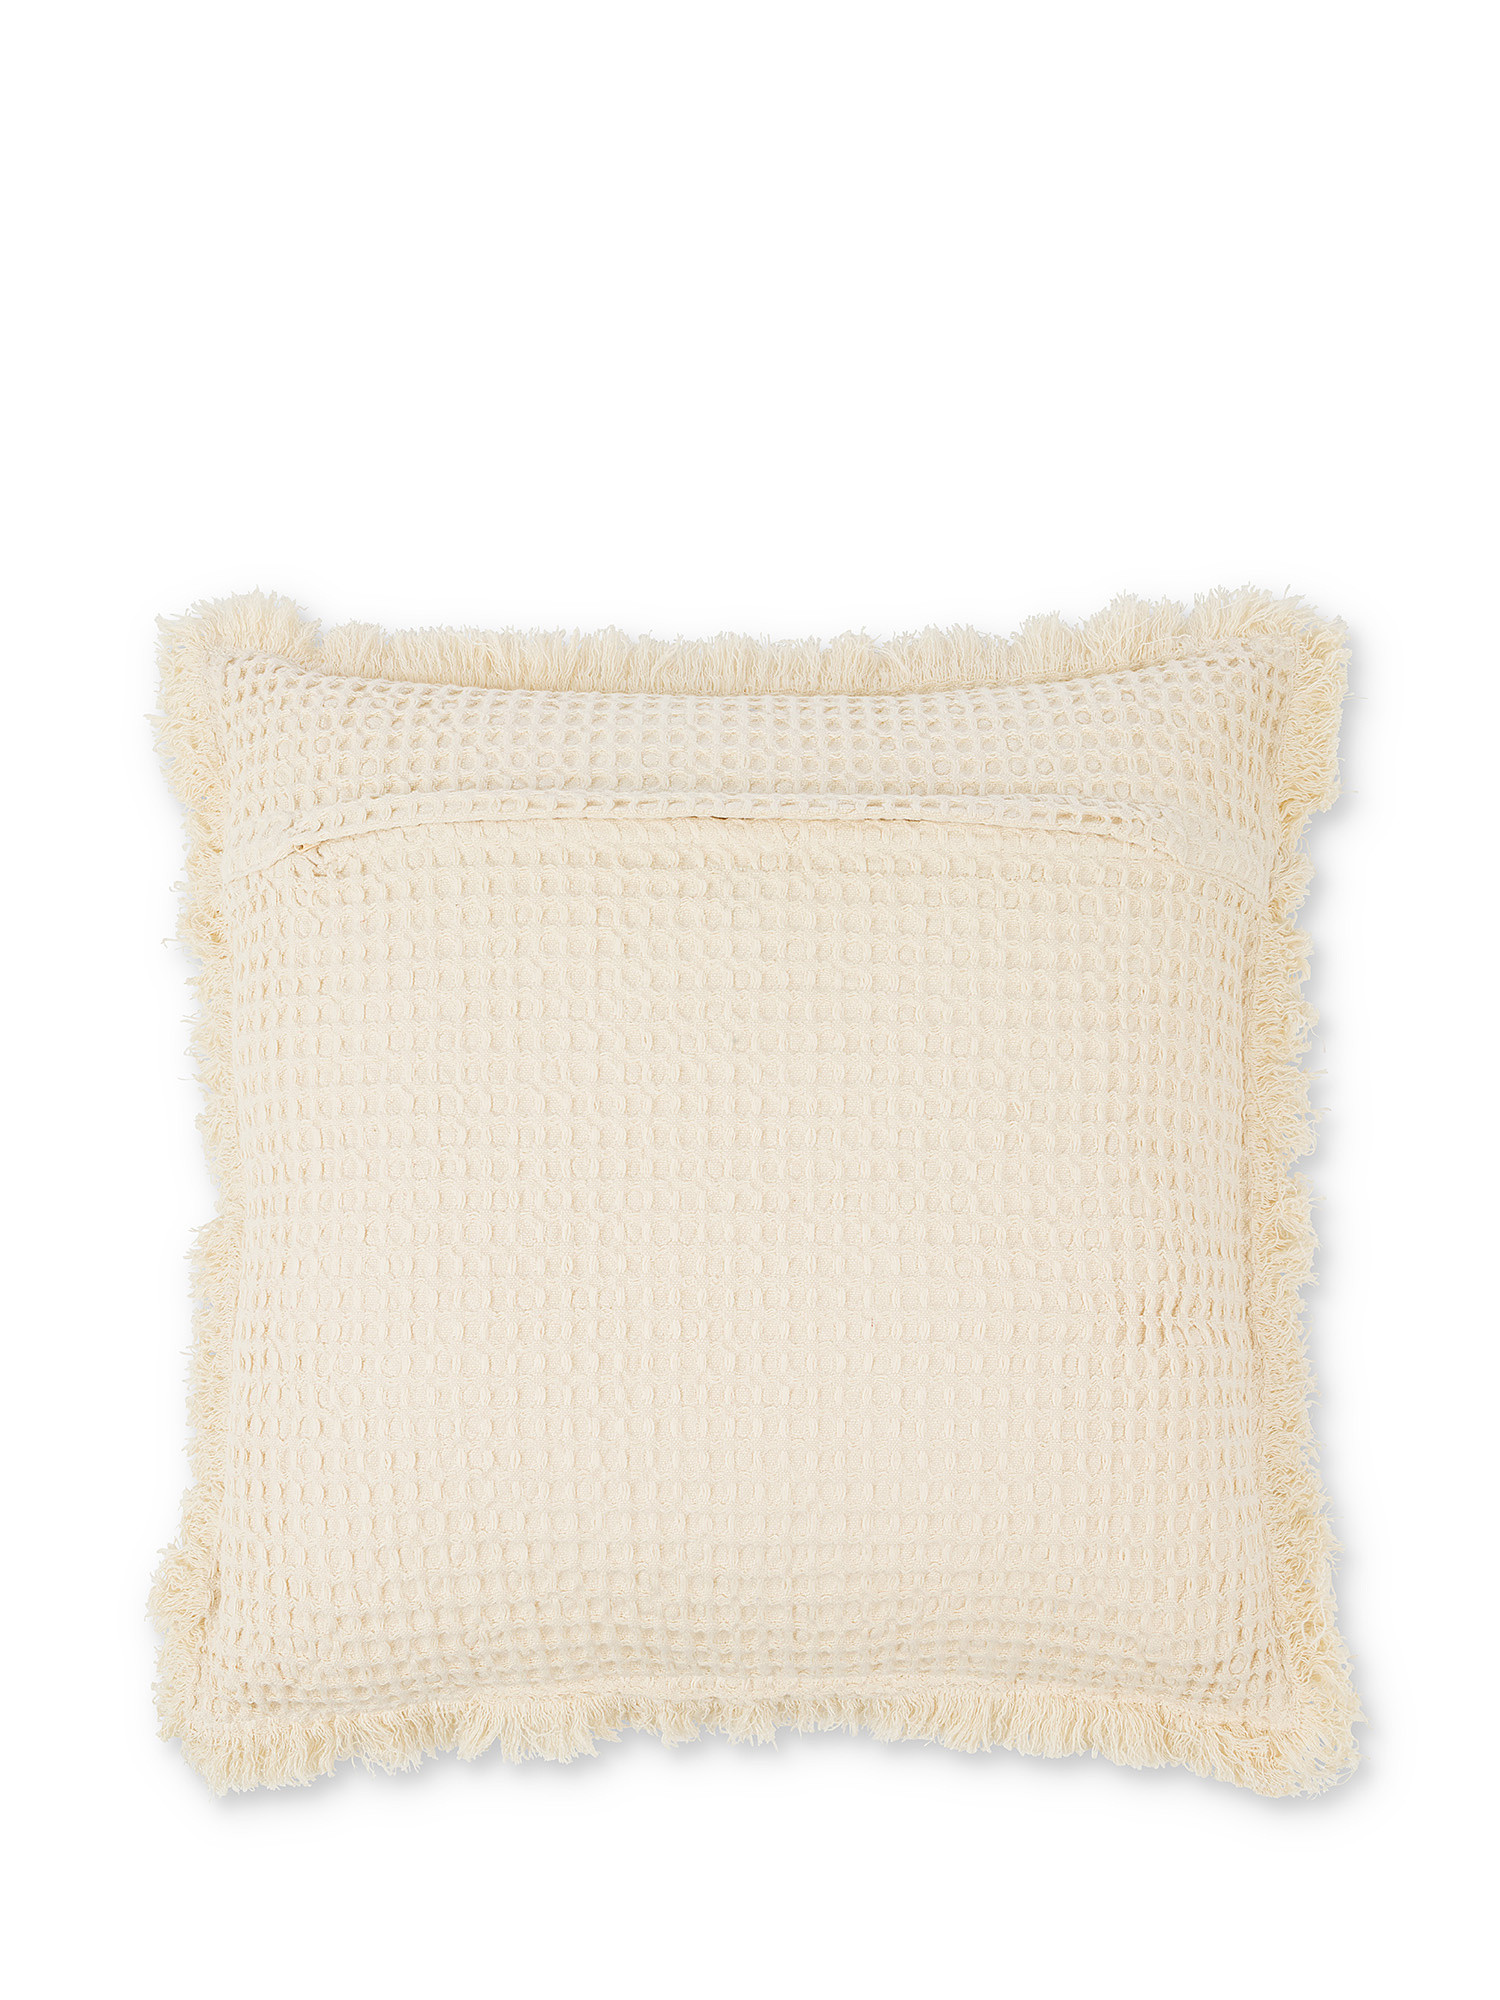 Honeycomb cotton cushion 45x45cm, Beige, large image number 1